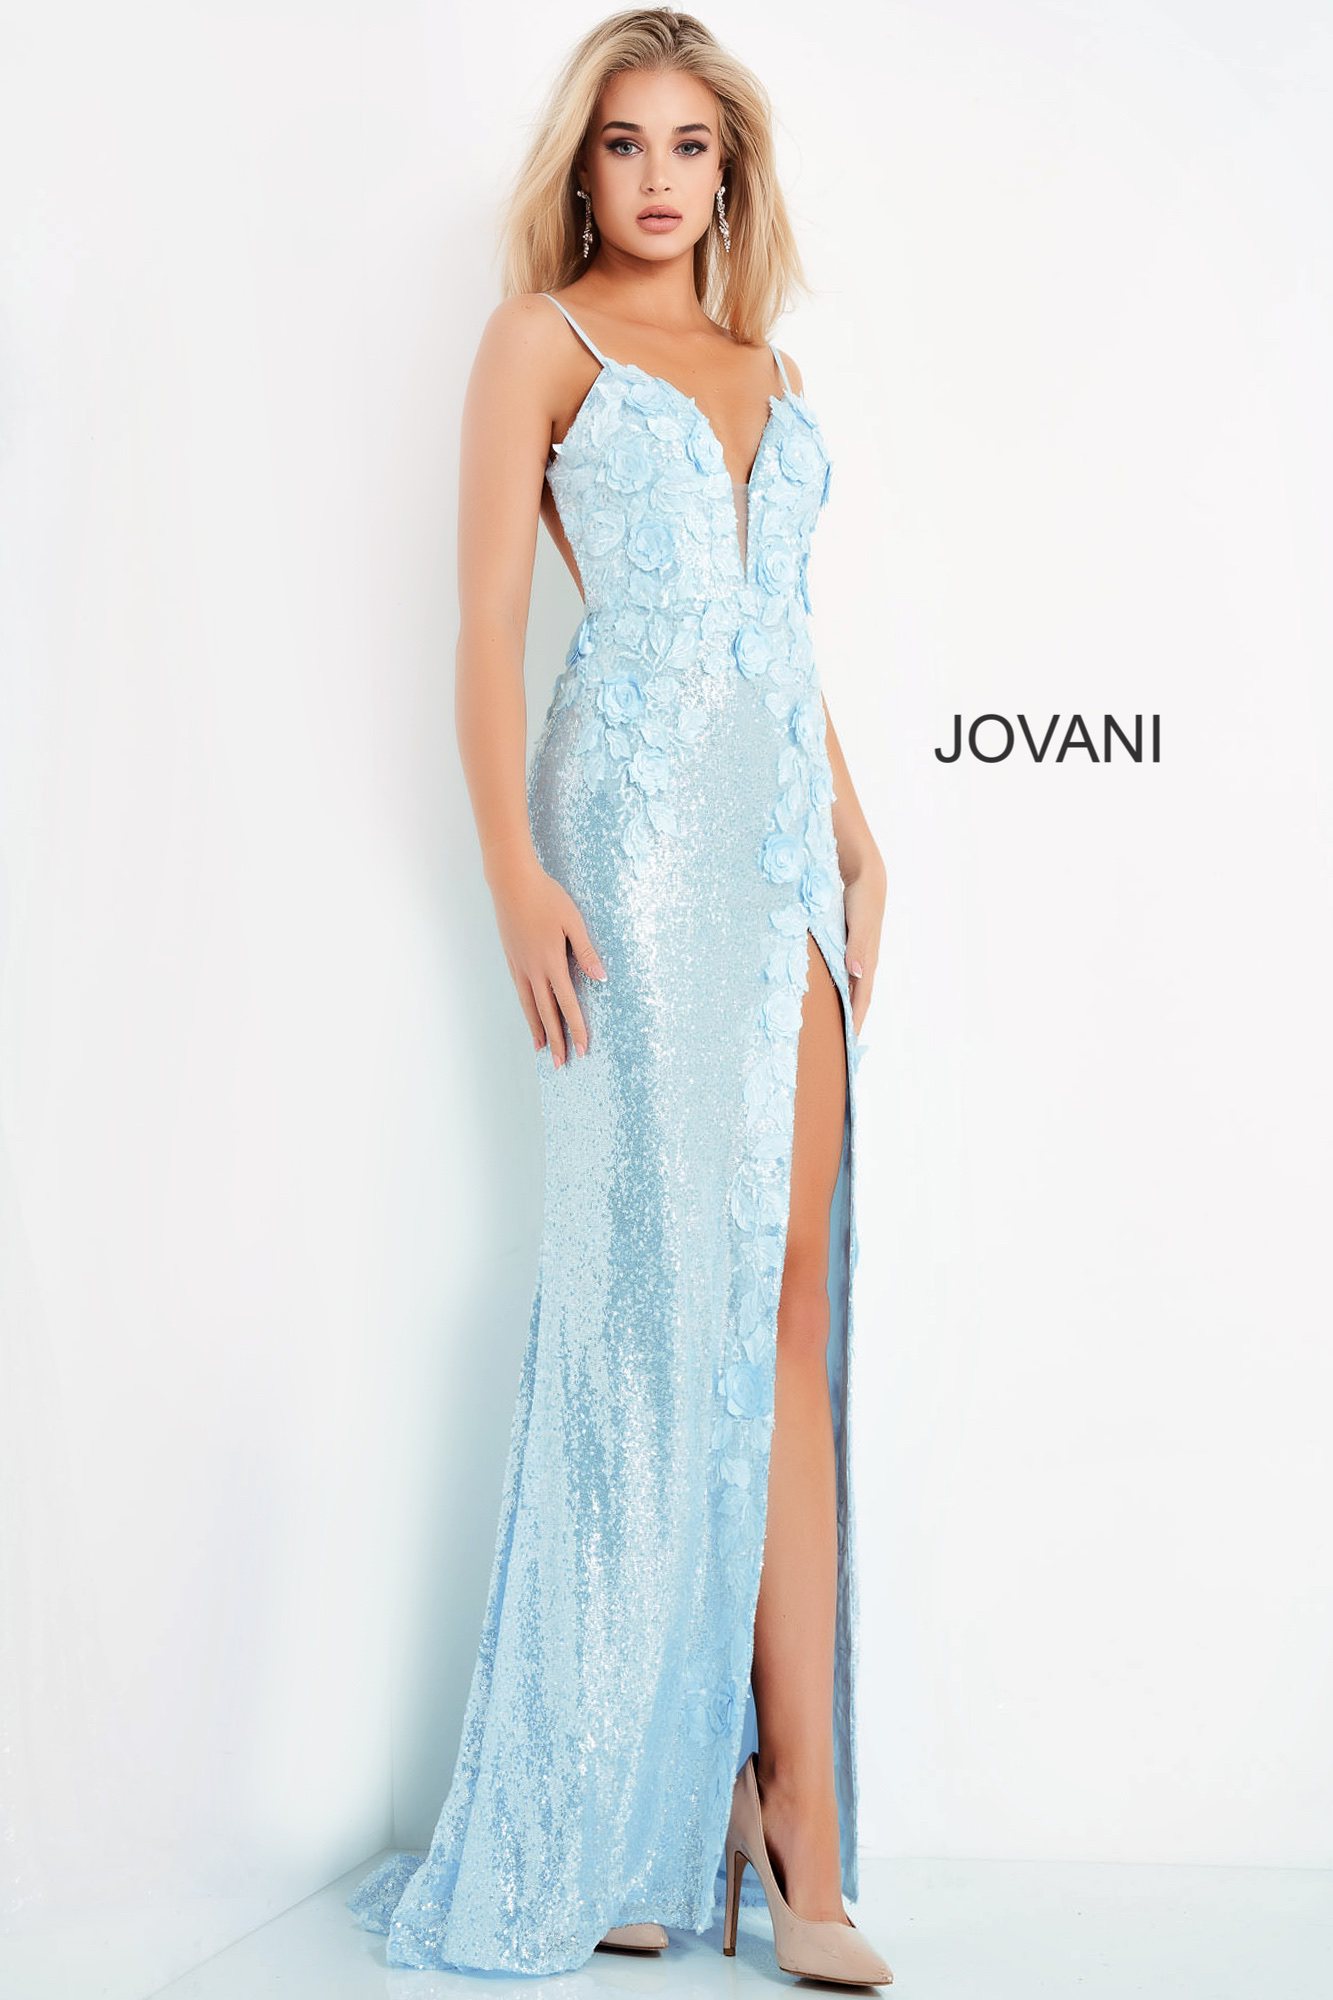 Jovani Dress 1012 - Henri's